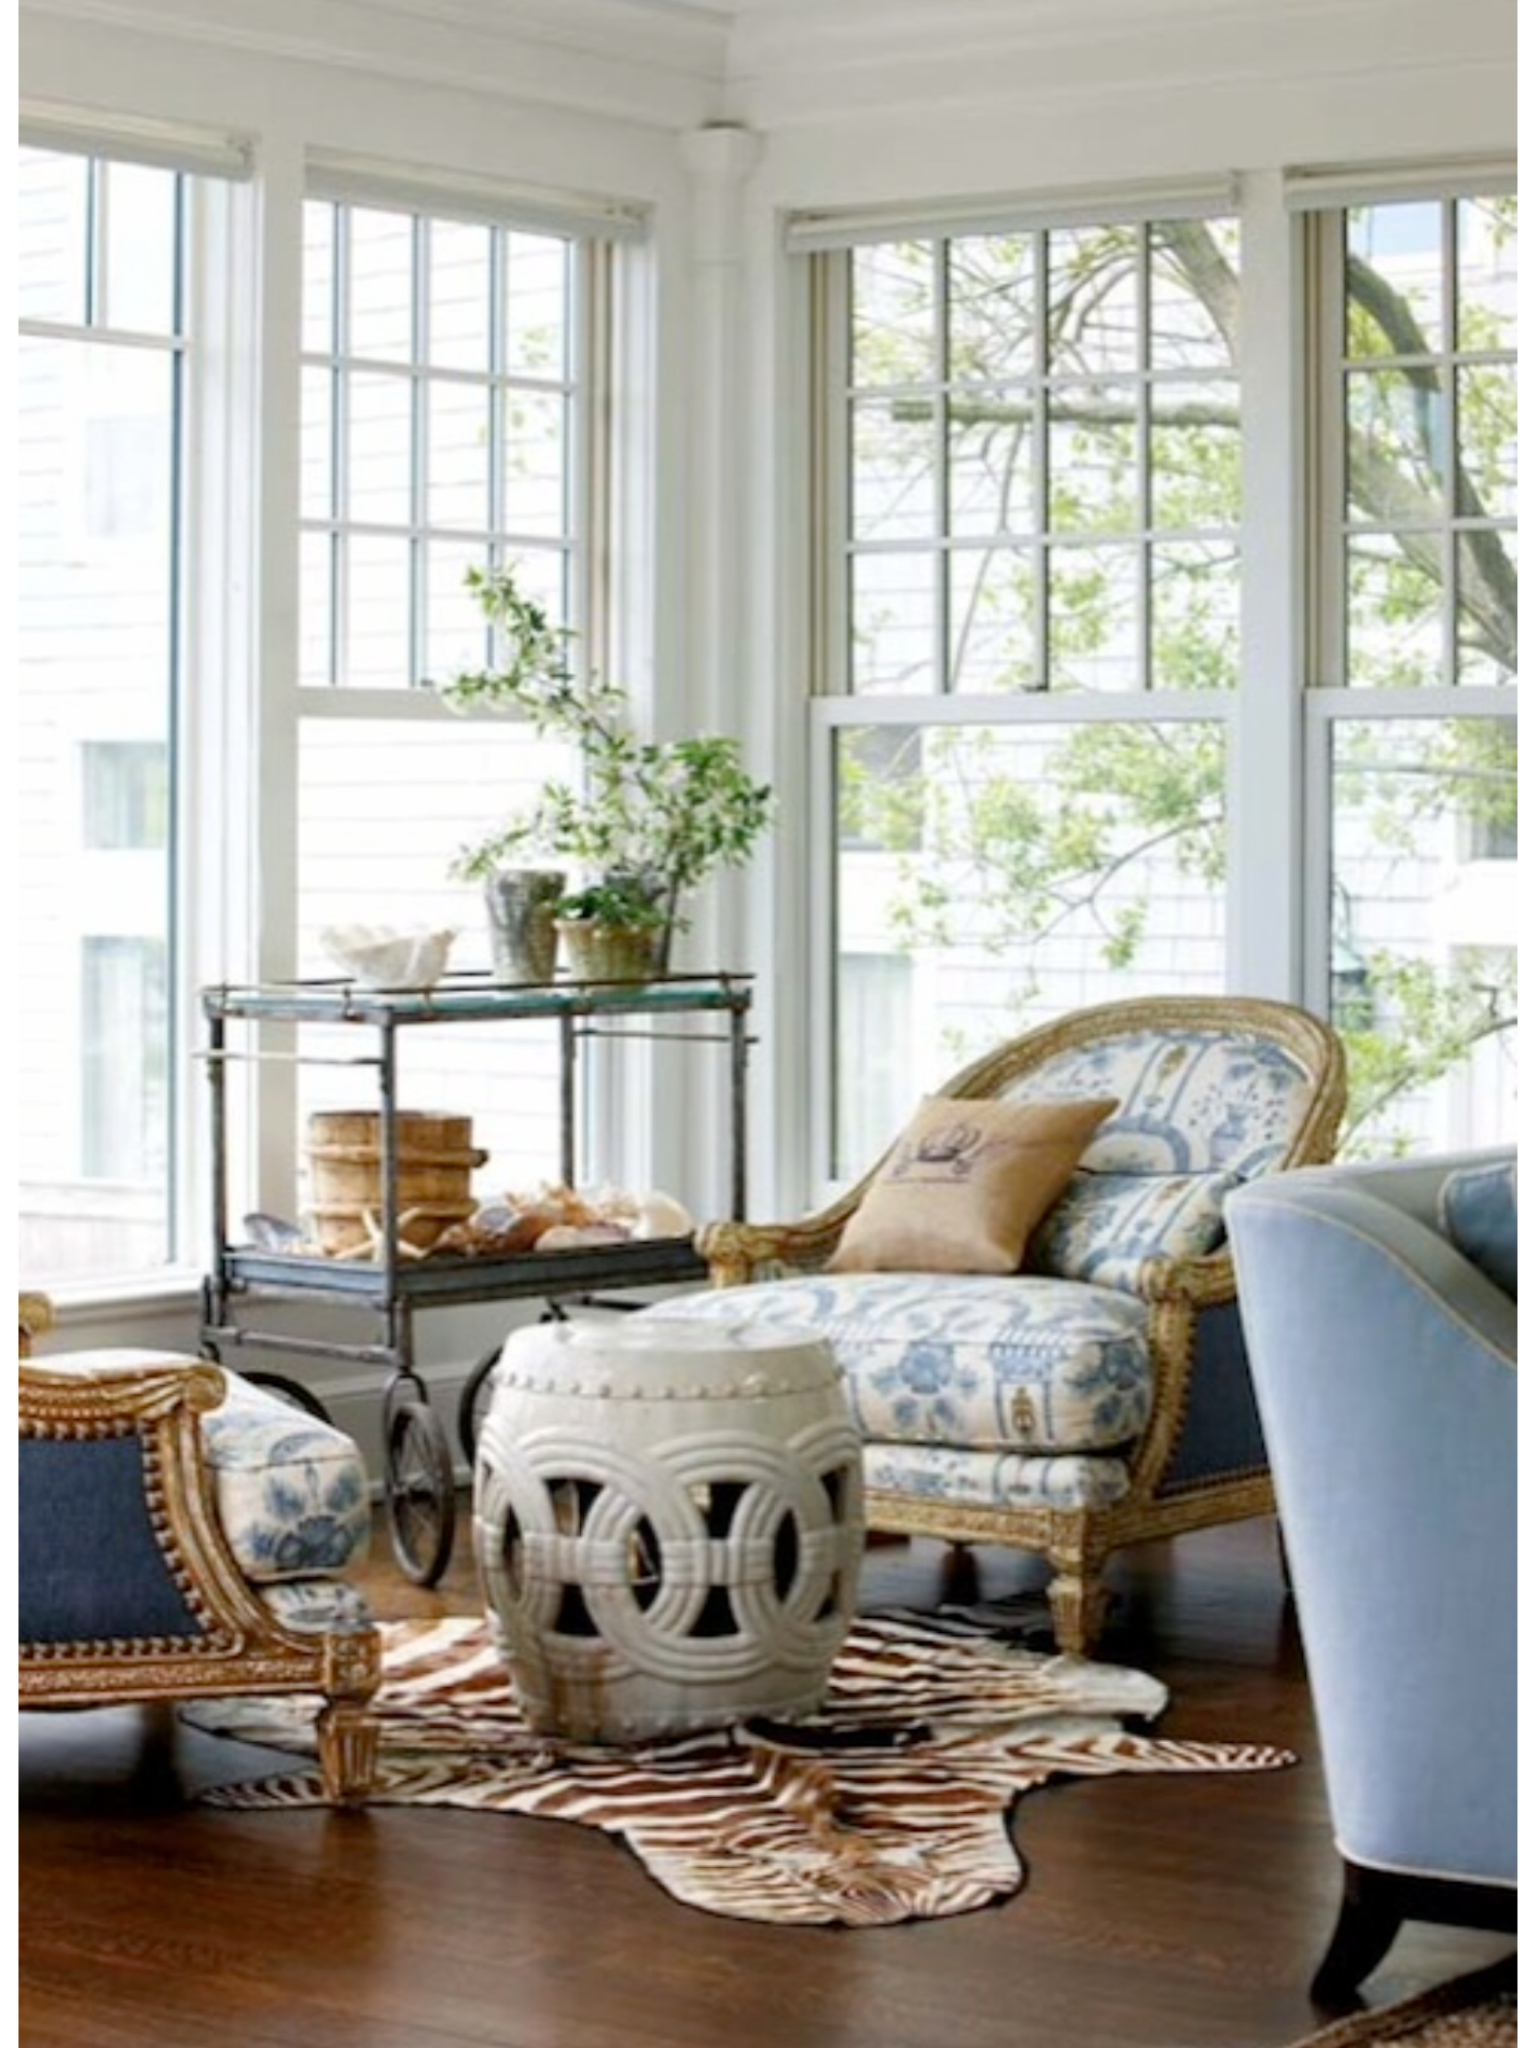 Blue and white garden stool